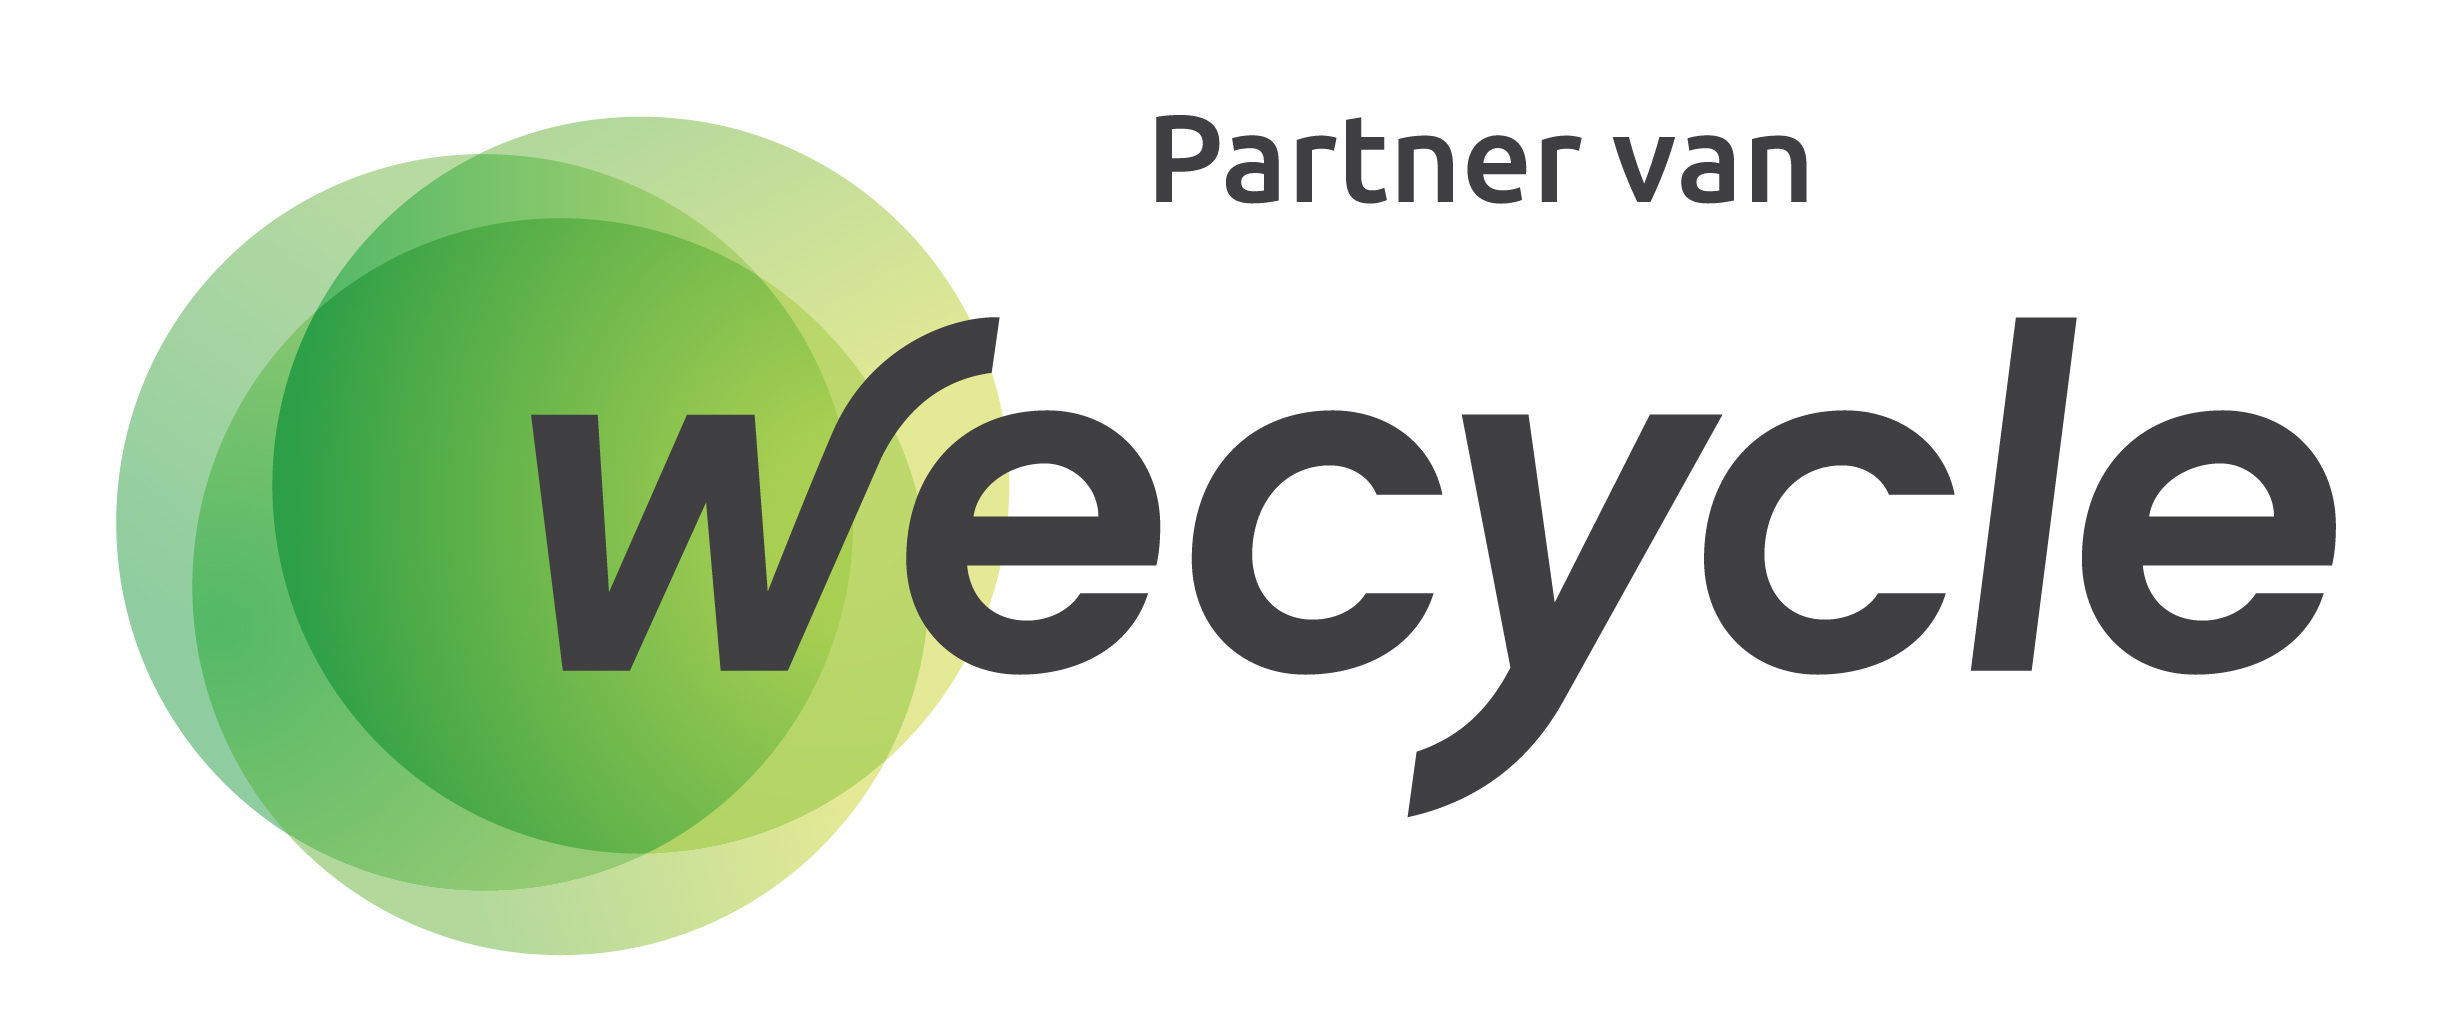 Partner van Wecycle